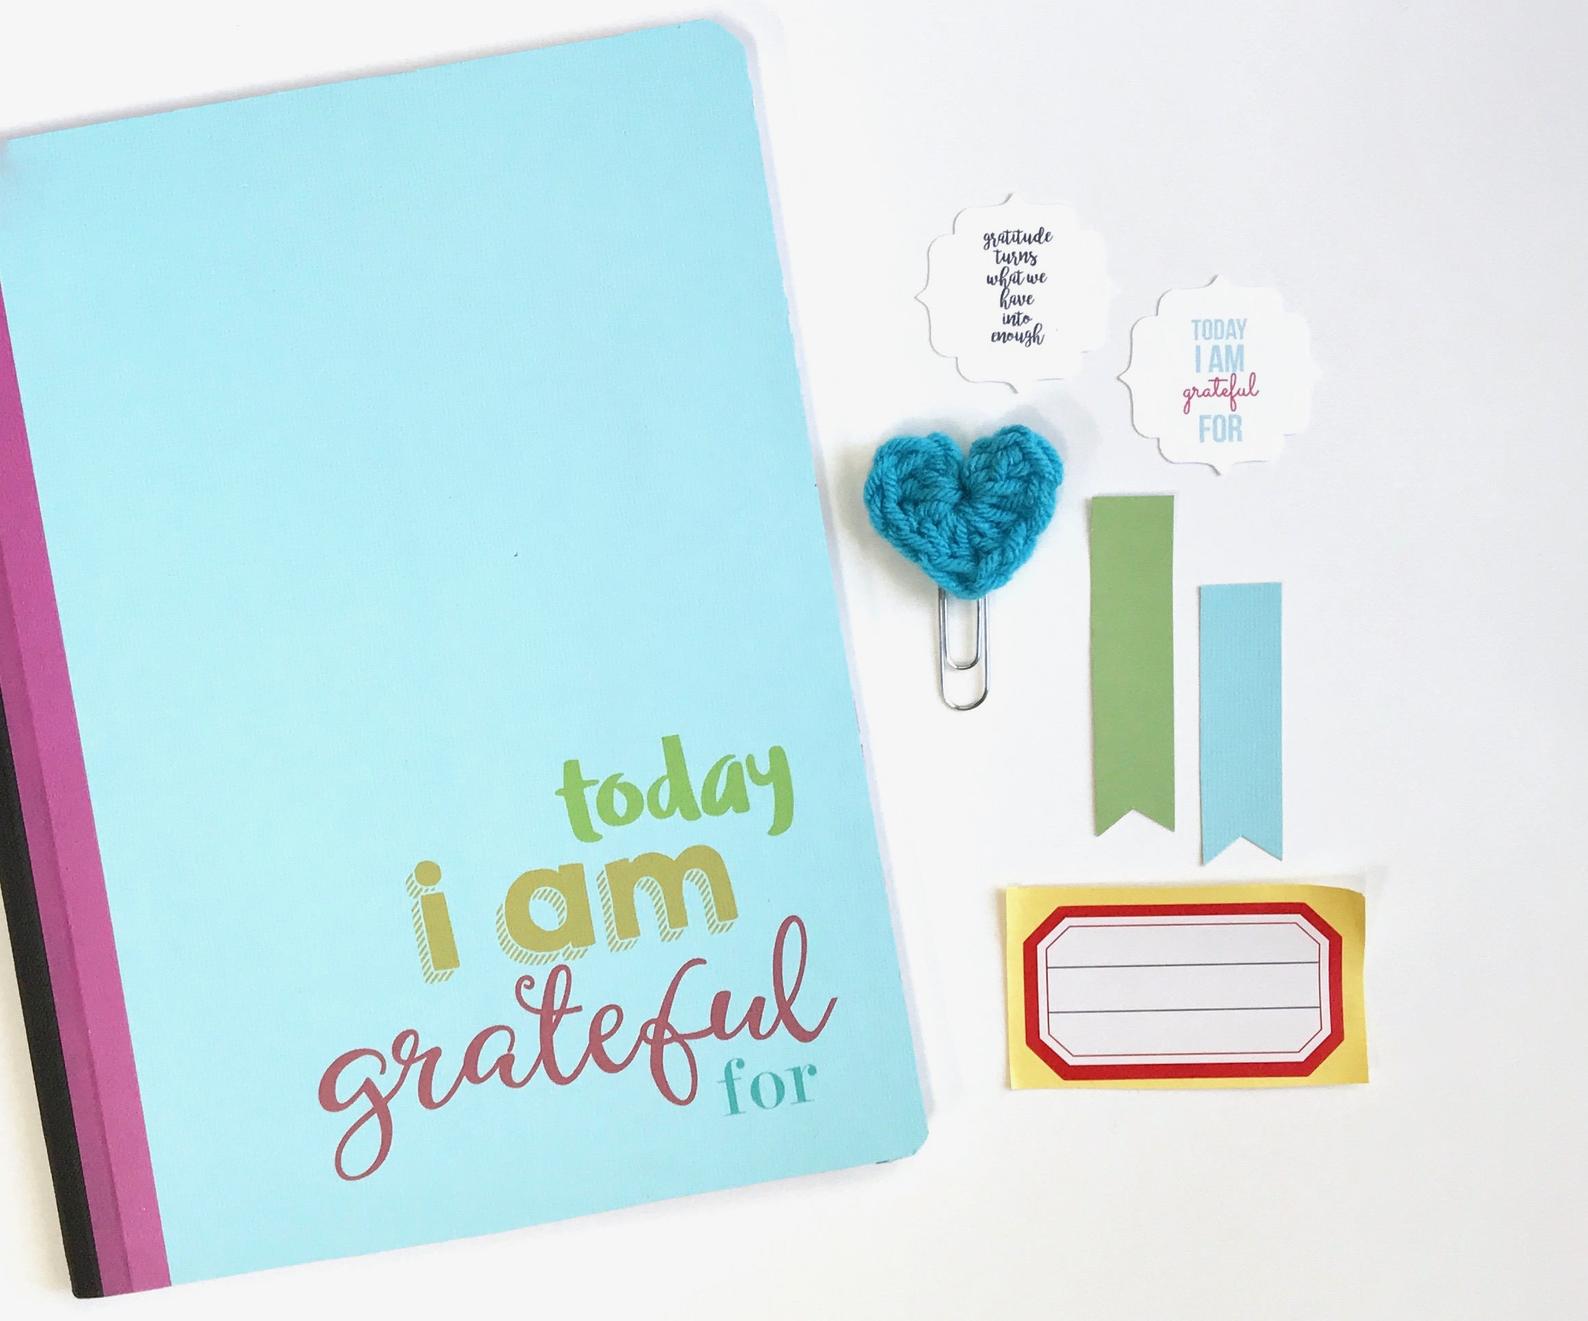 #Gratitude Journal #2020 #gratitude #journal #journaling #reflection journal #grateful #gratefulness #thankfulness journal #Things I Am Grateful For #midori #Travelers Notebook